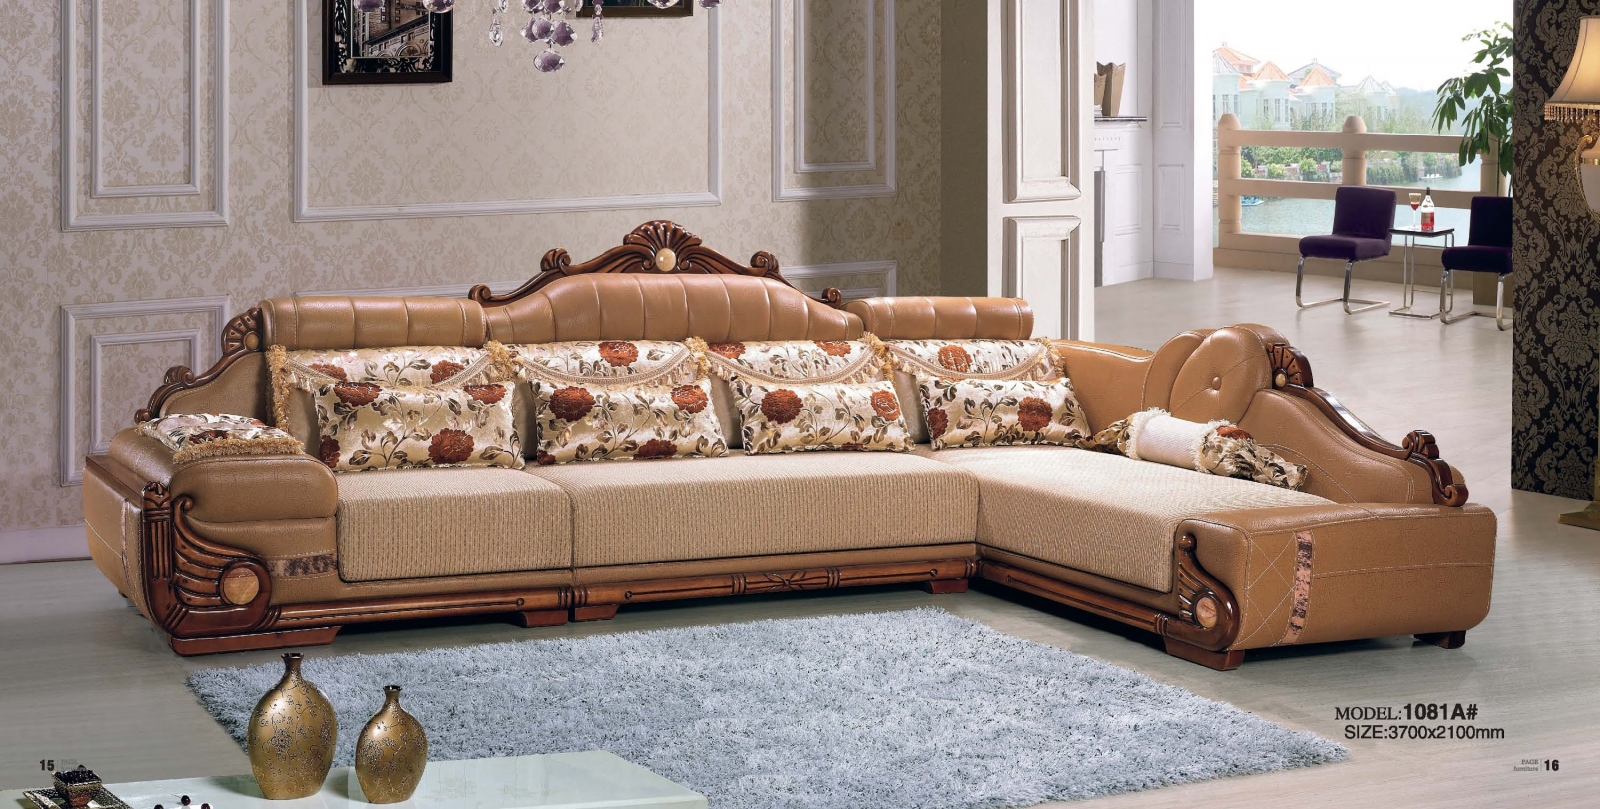 Bọc ghế sofa da theo phong cách cổ điển